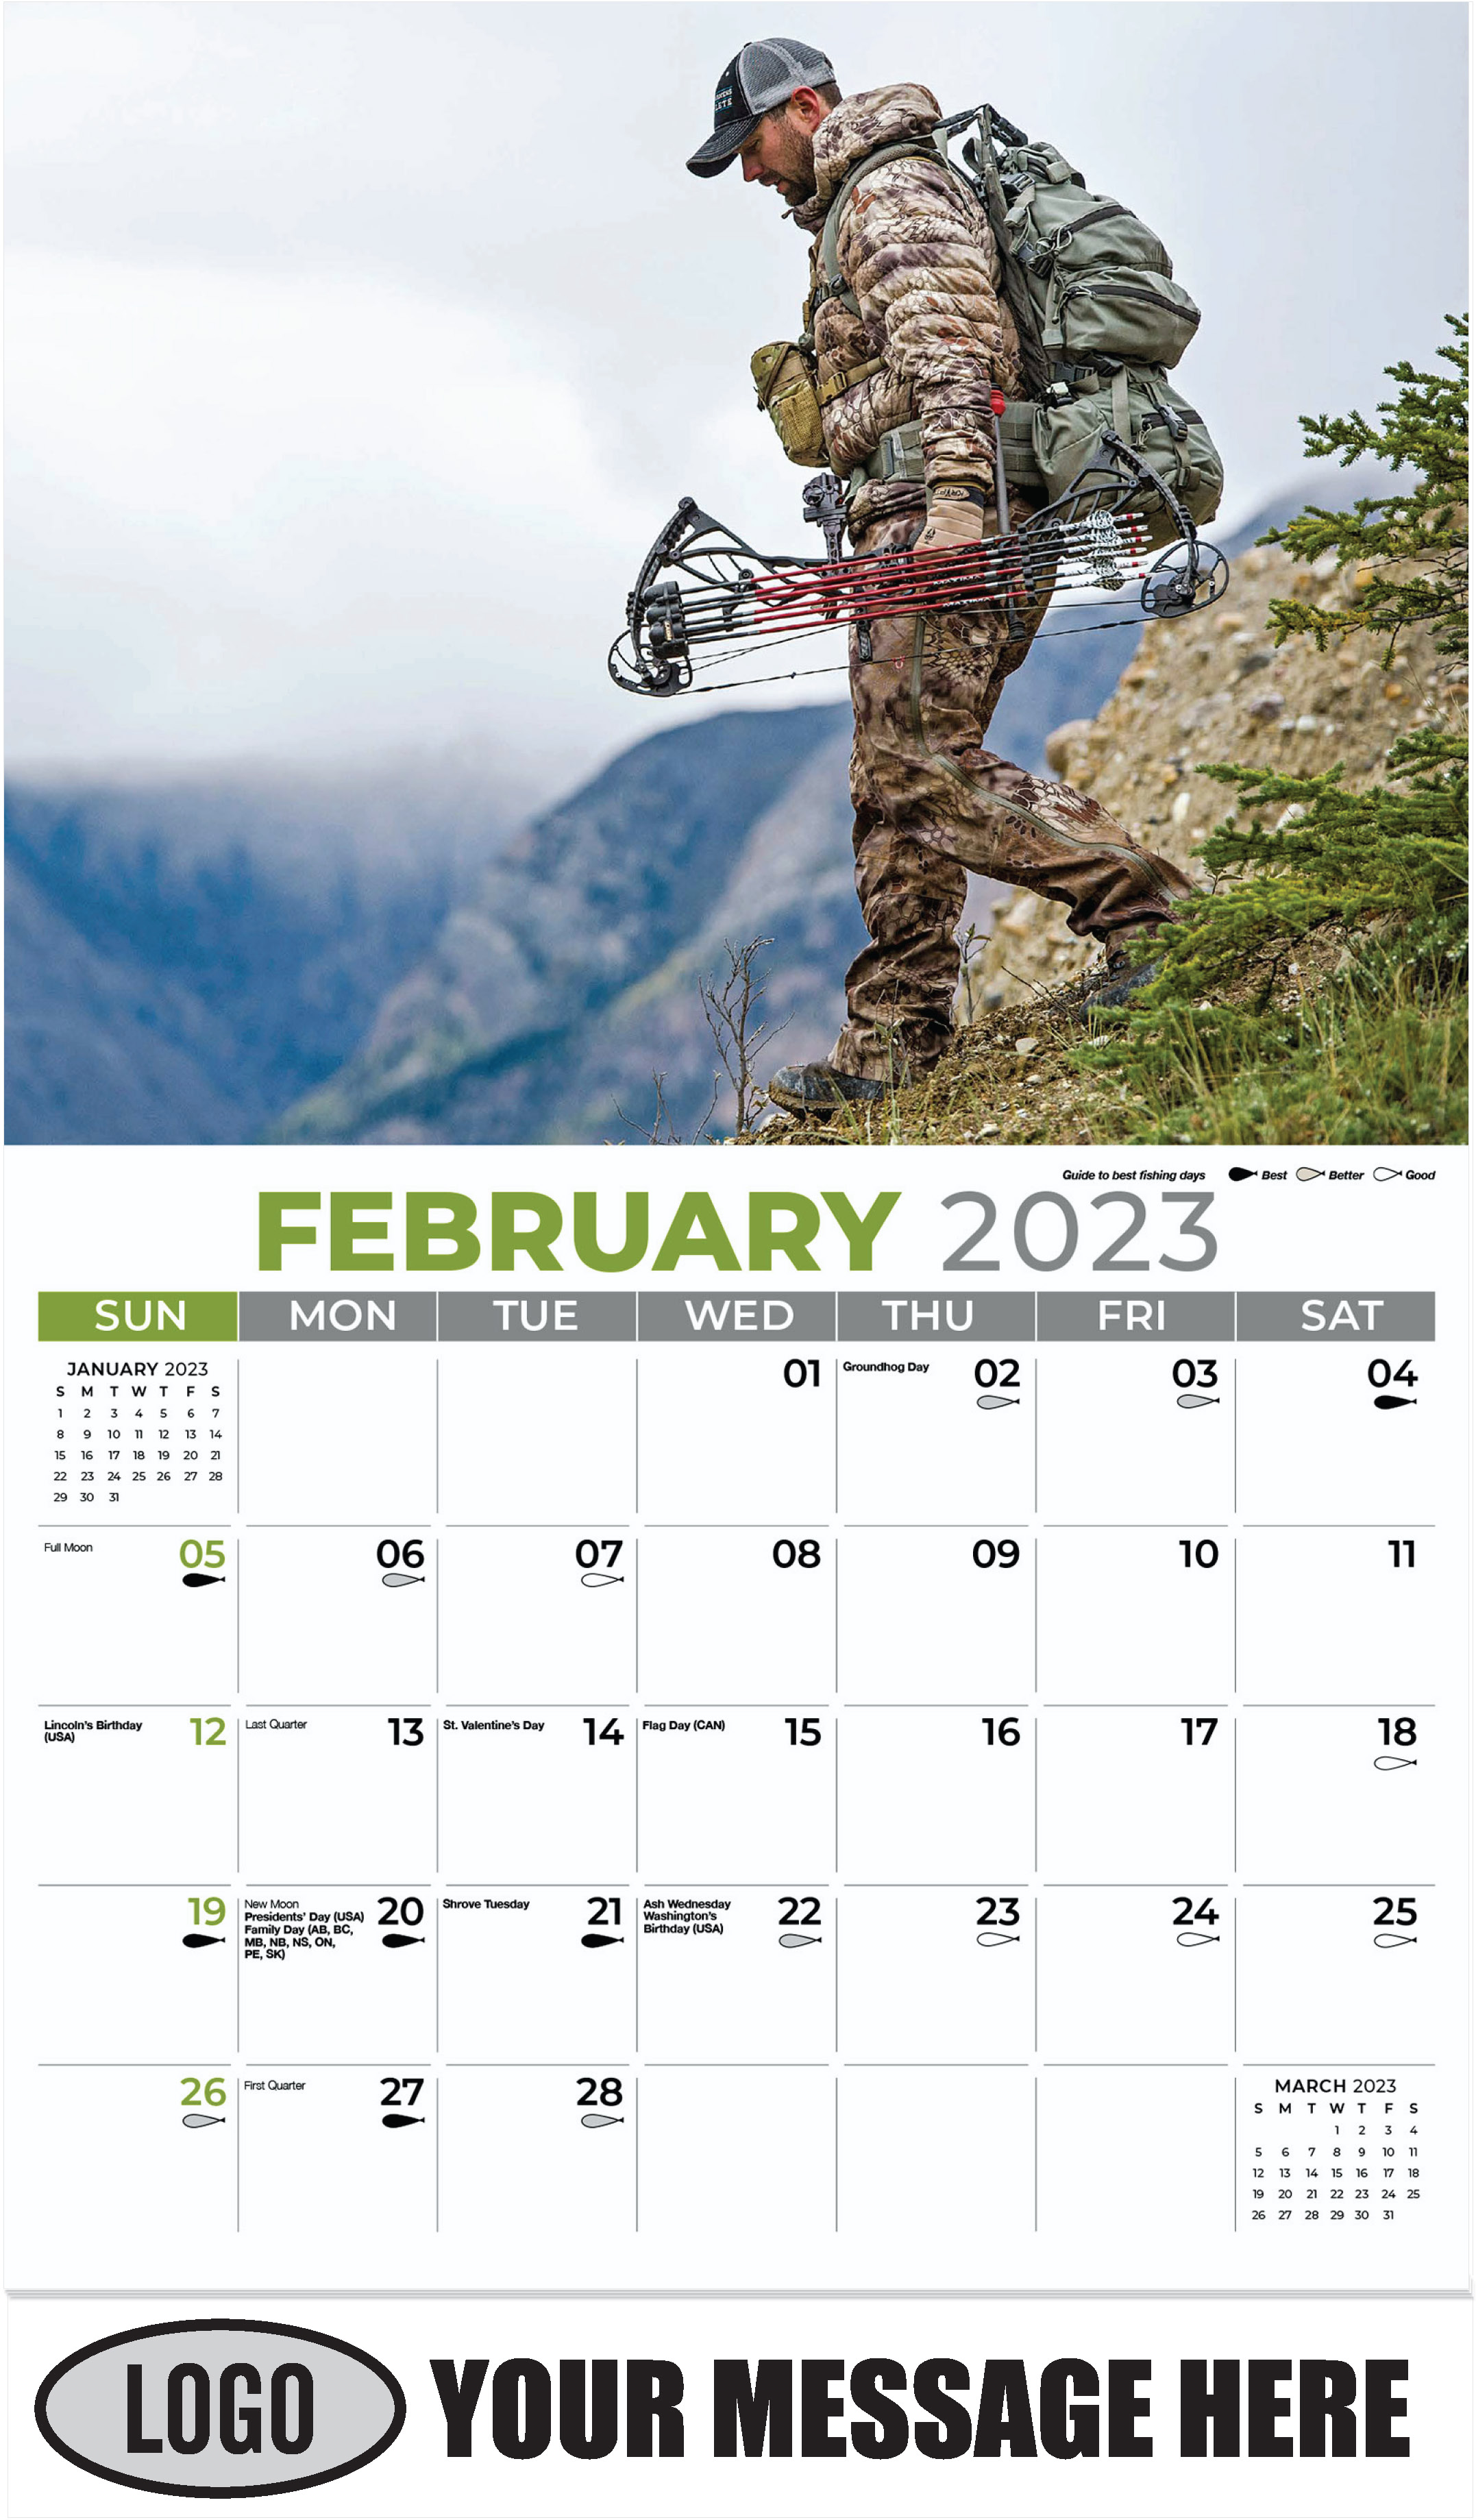 February - Fishing & Hunting 2023 Promotional Calendar